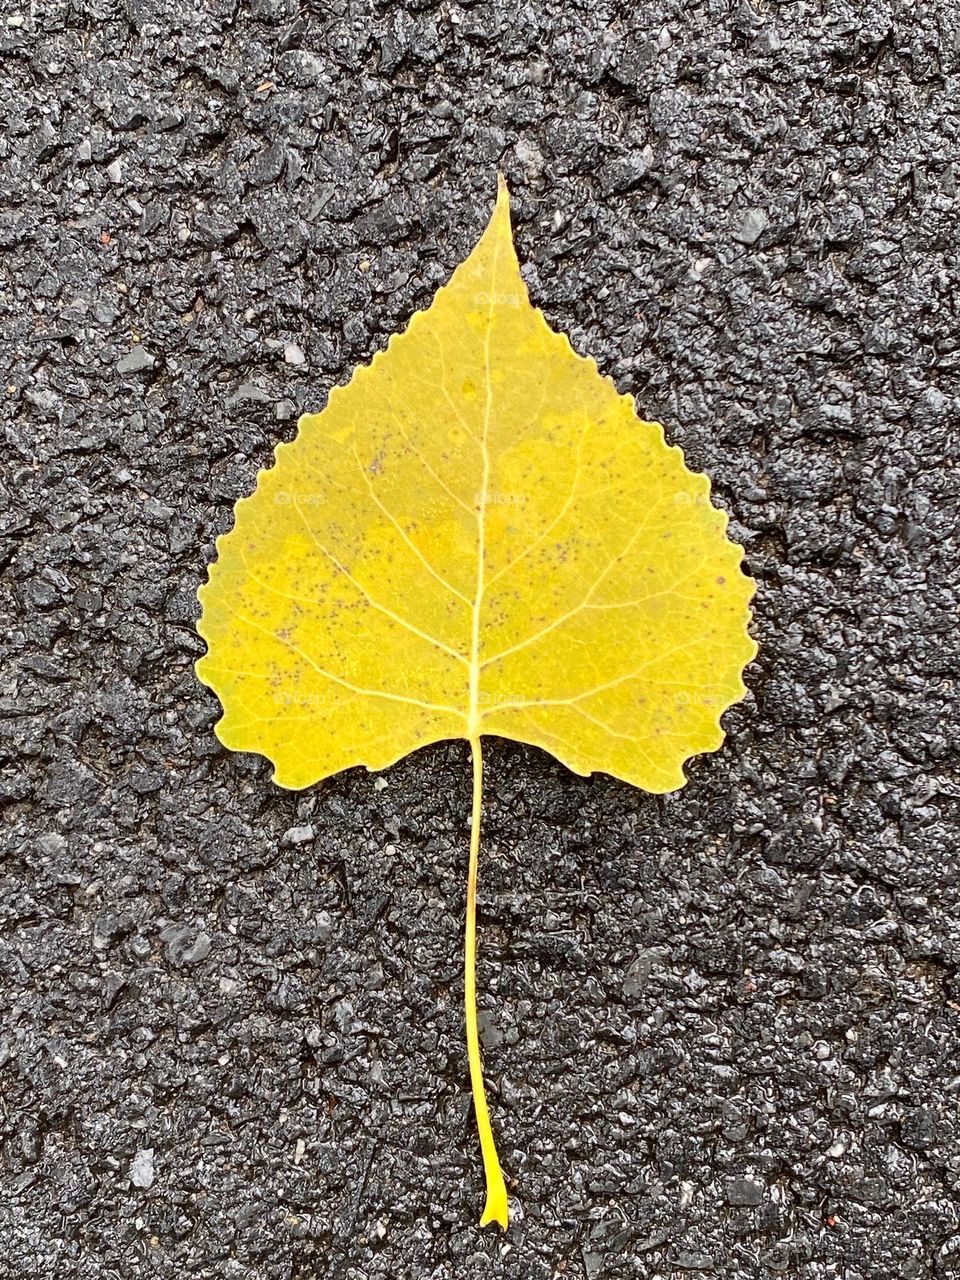 A fallen aspen leaf